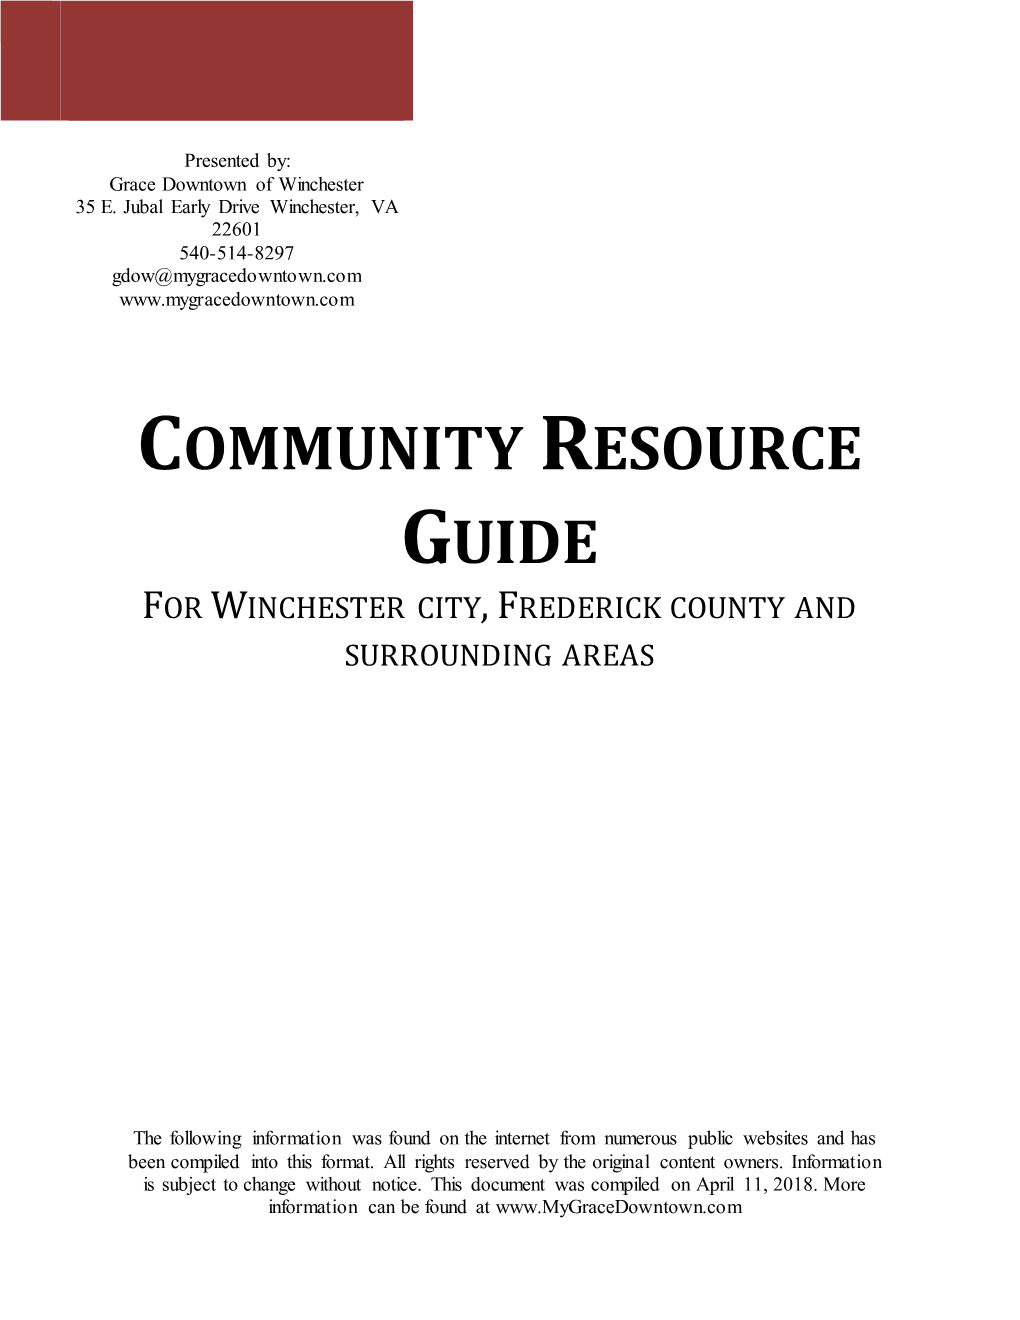 Community Resource's